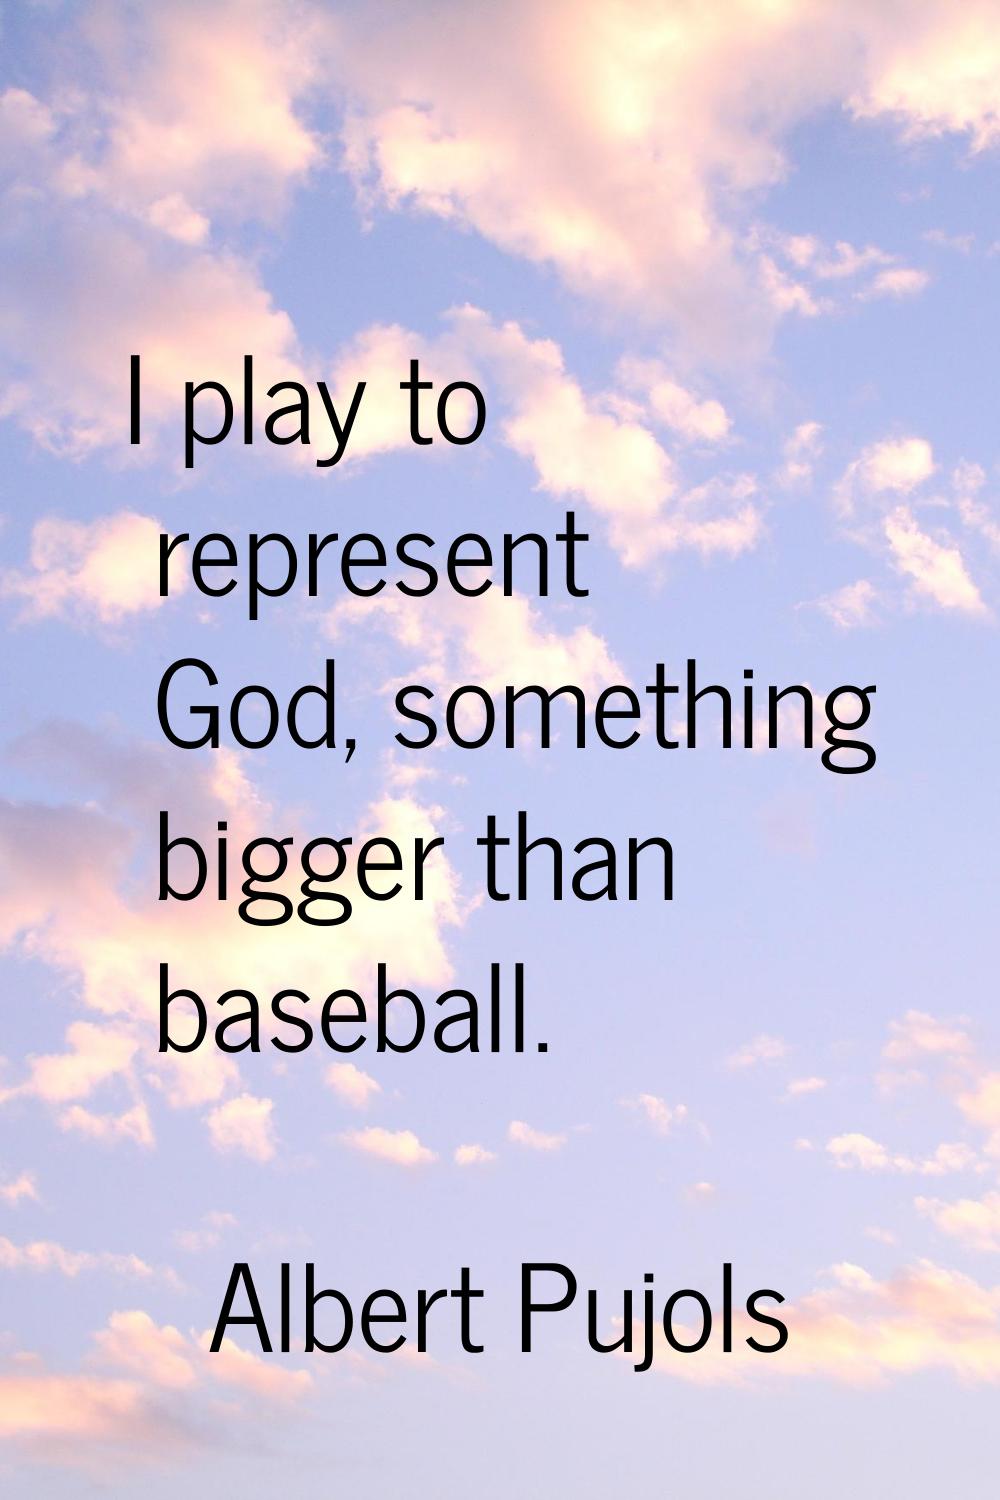 I play to represent God, something bigger than baseball.